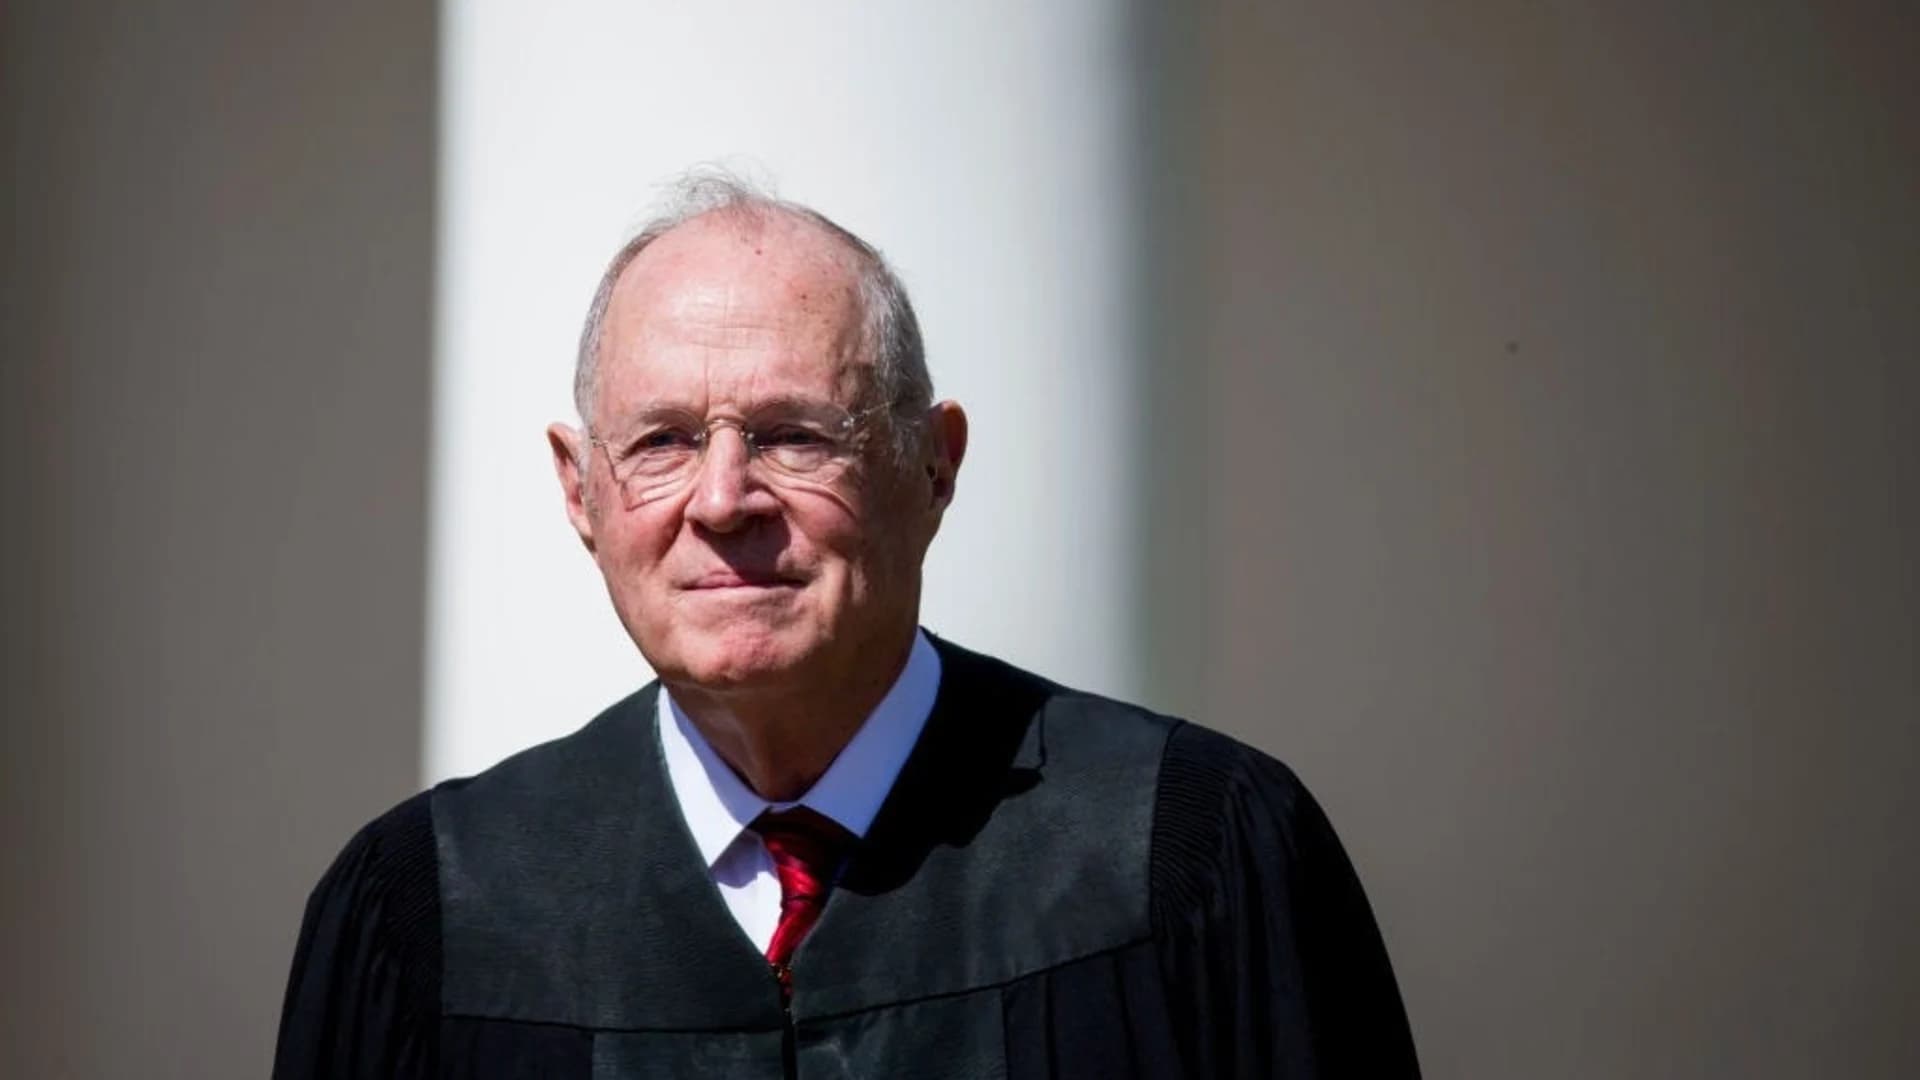 Justice Kennedy retiring; Trump gets 2nd Supreme Court pick